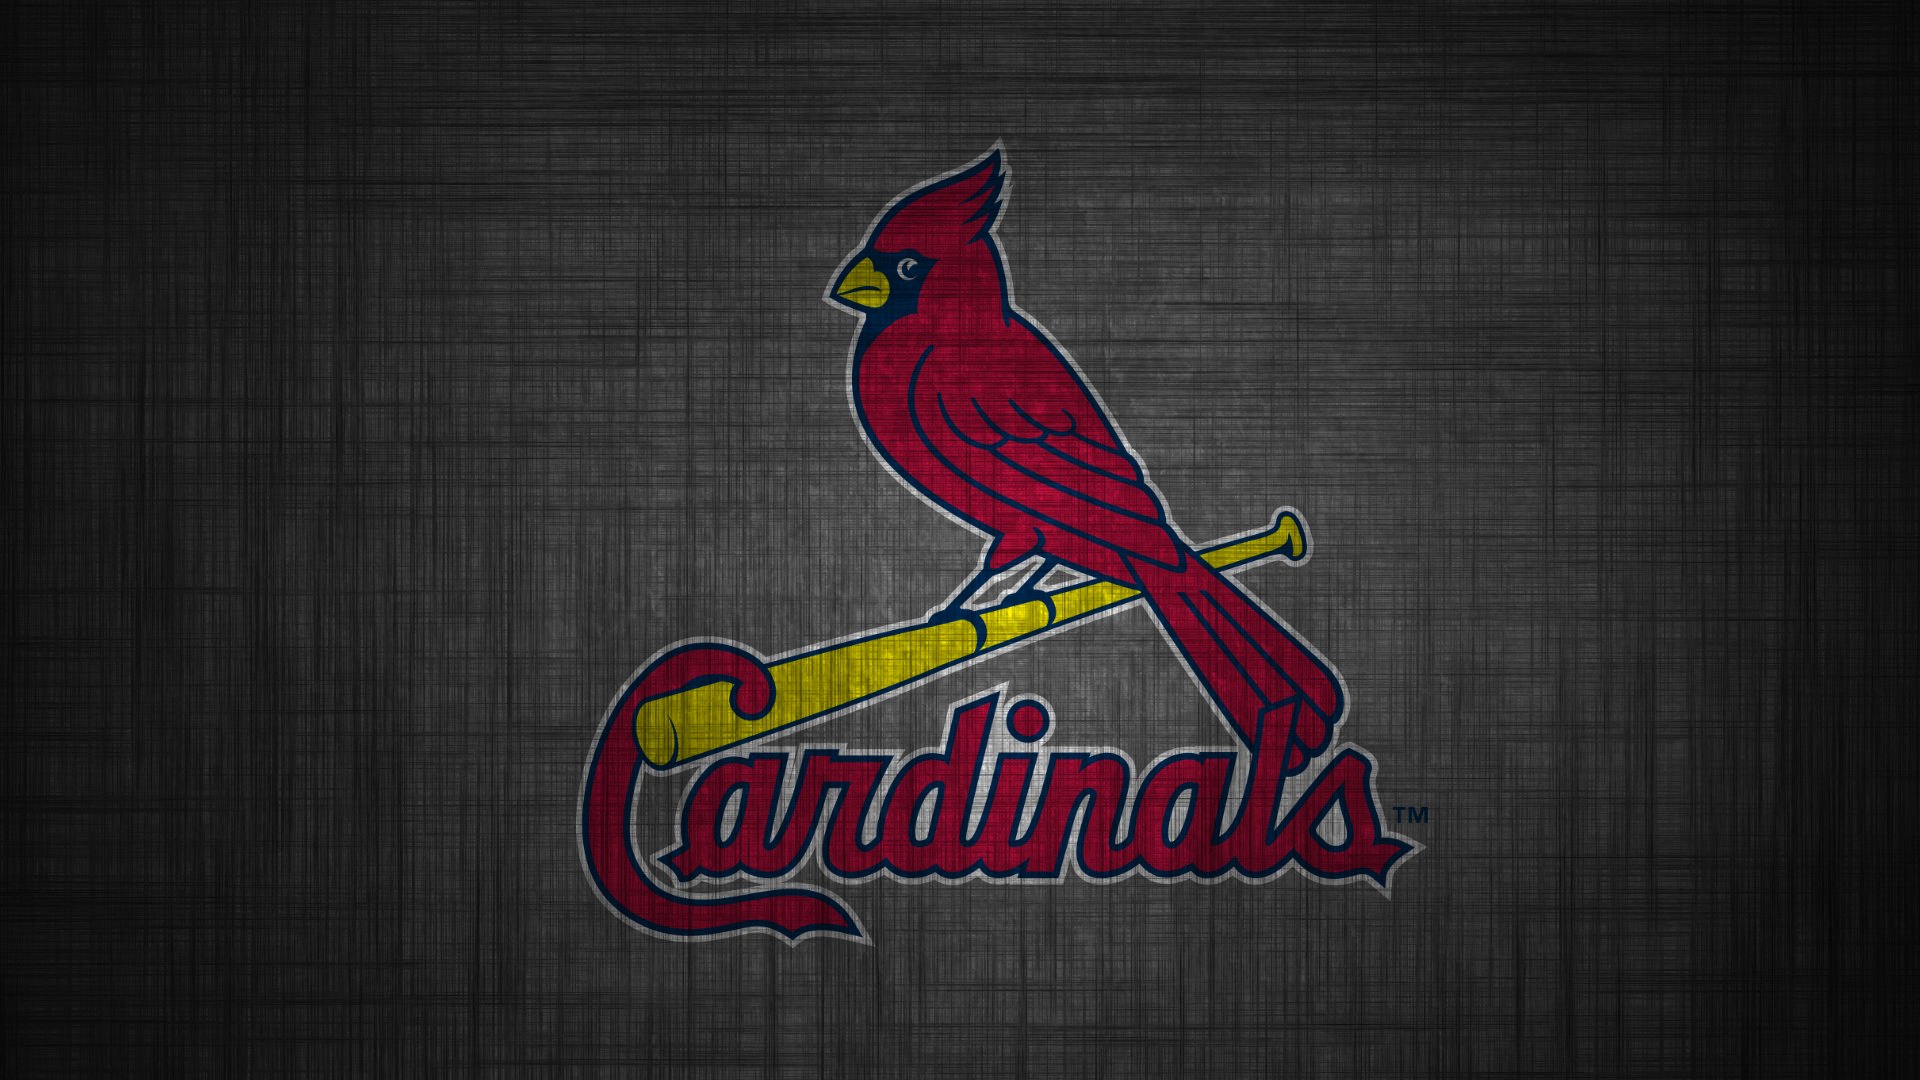 Arizona Cardinals Wallpaper High Quality